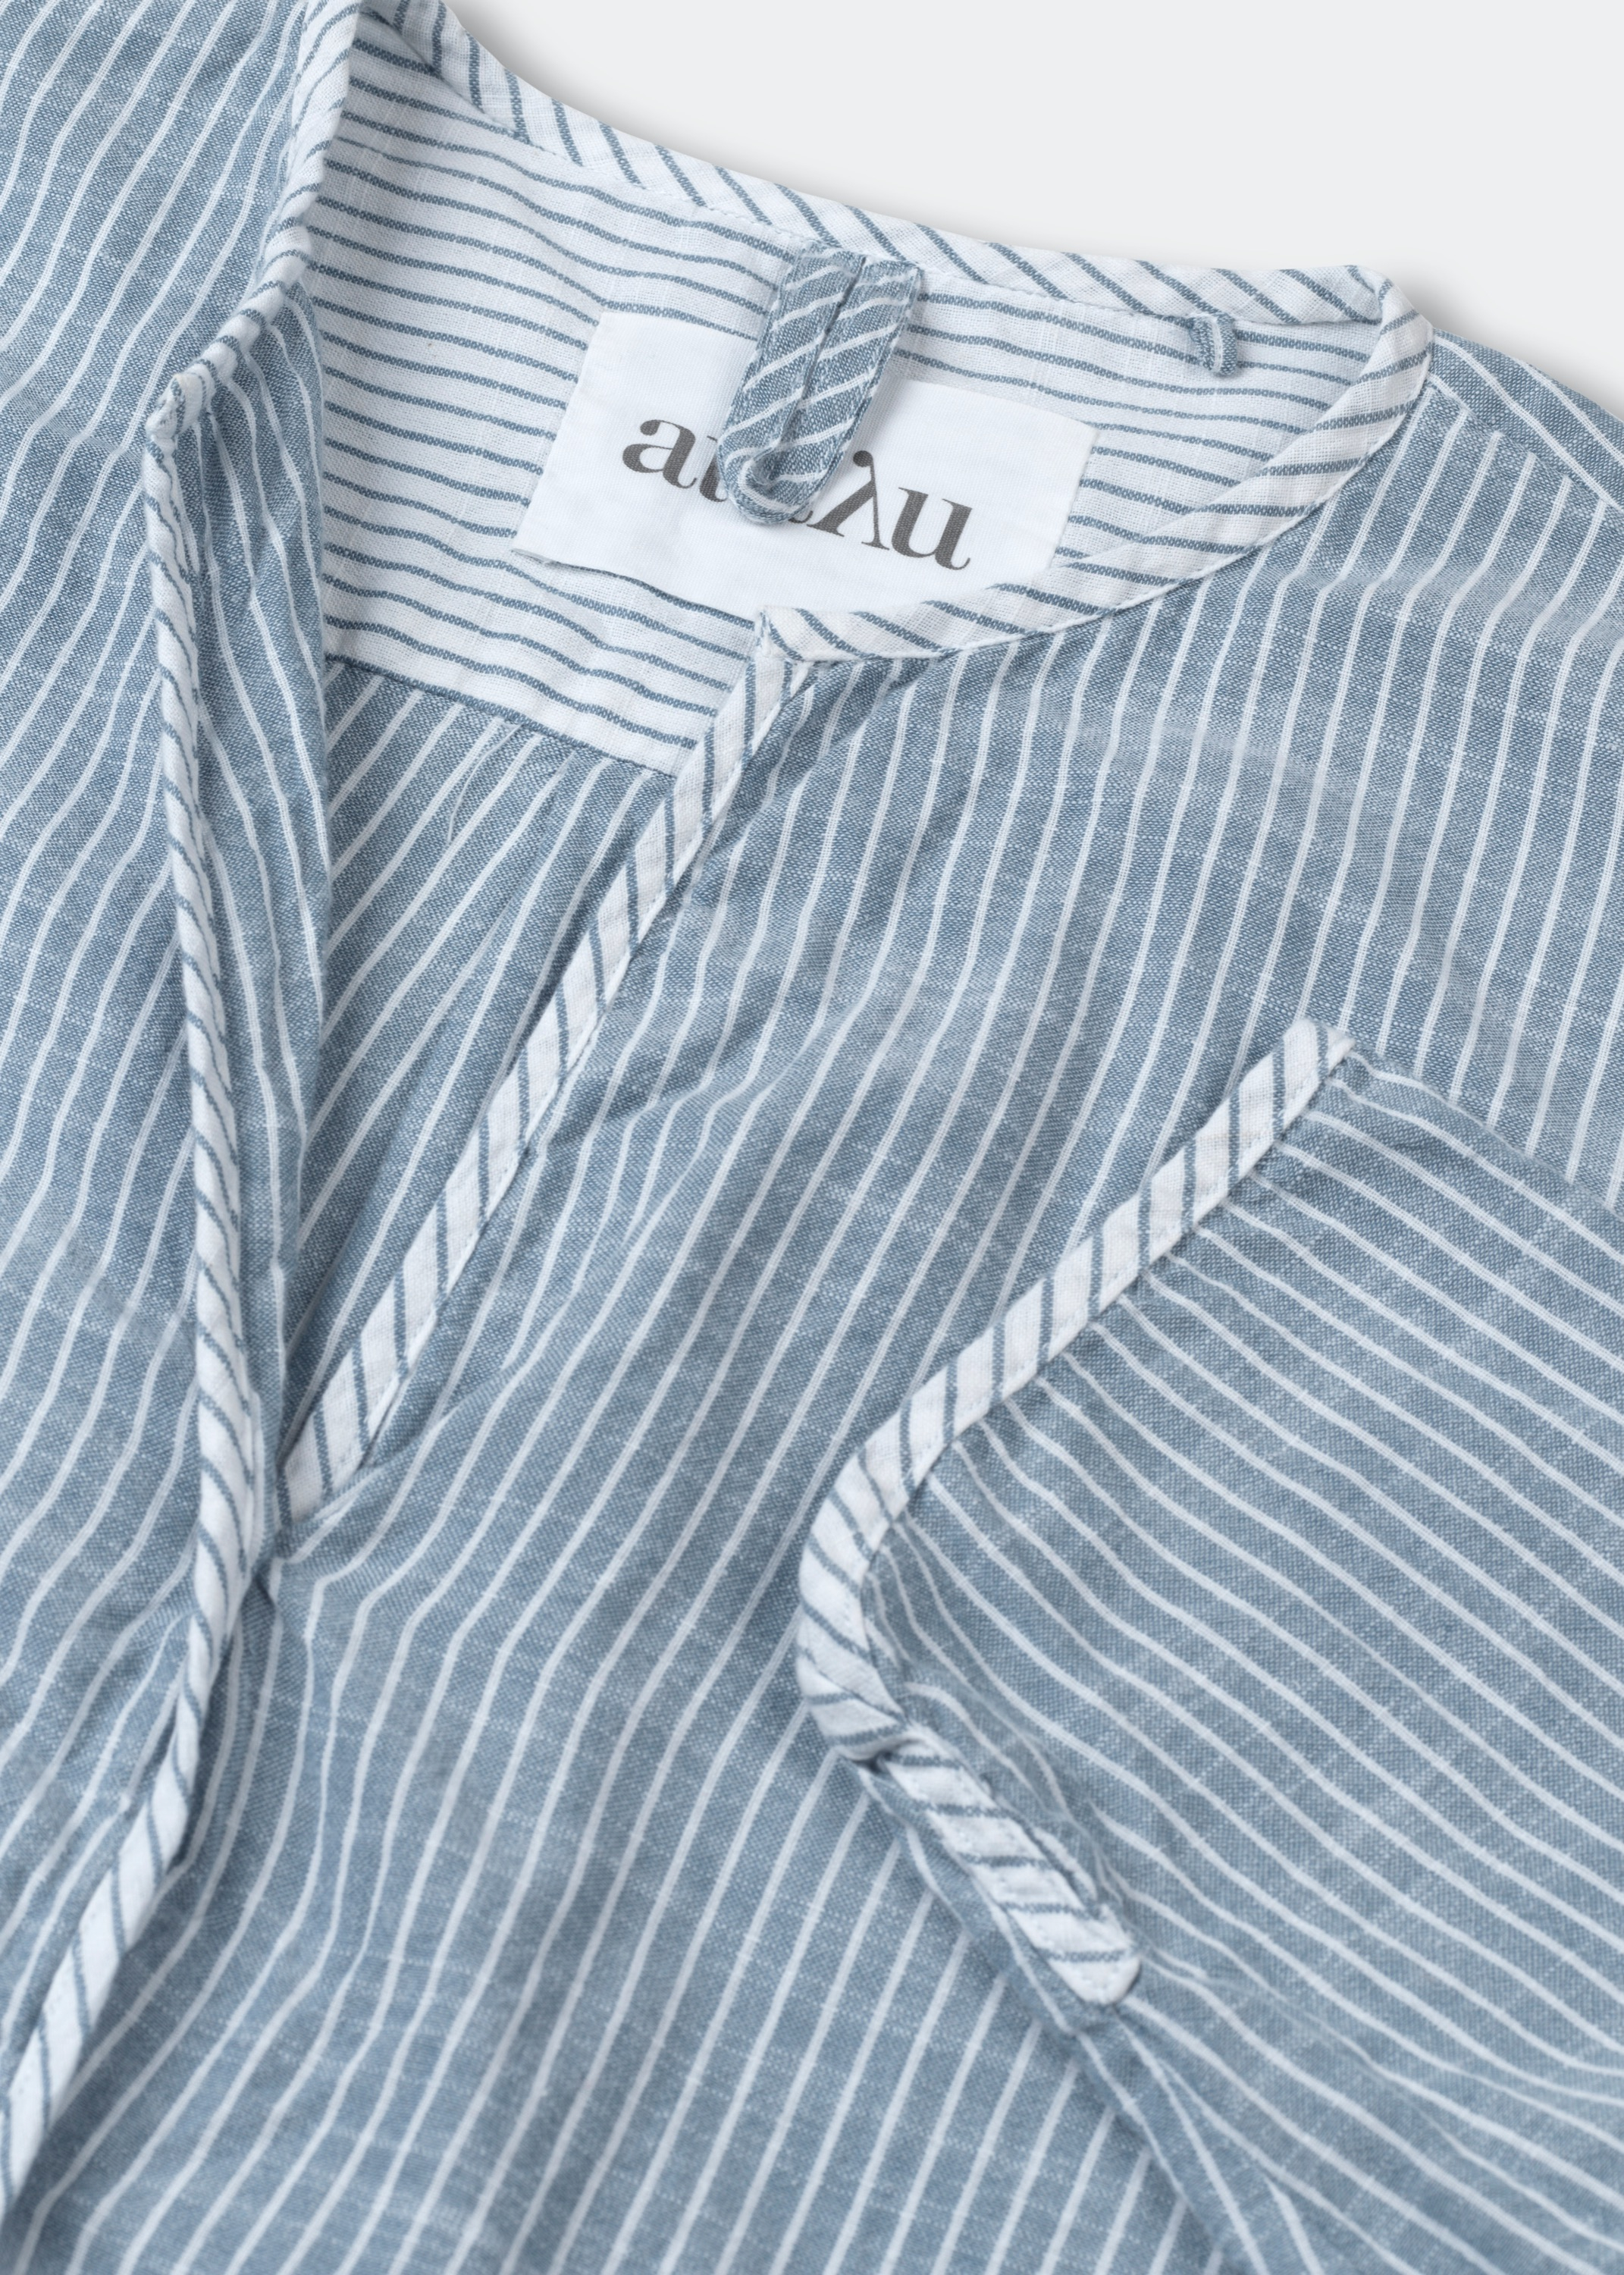 Sleepwear - Pyjamas Striped Thumbnail